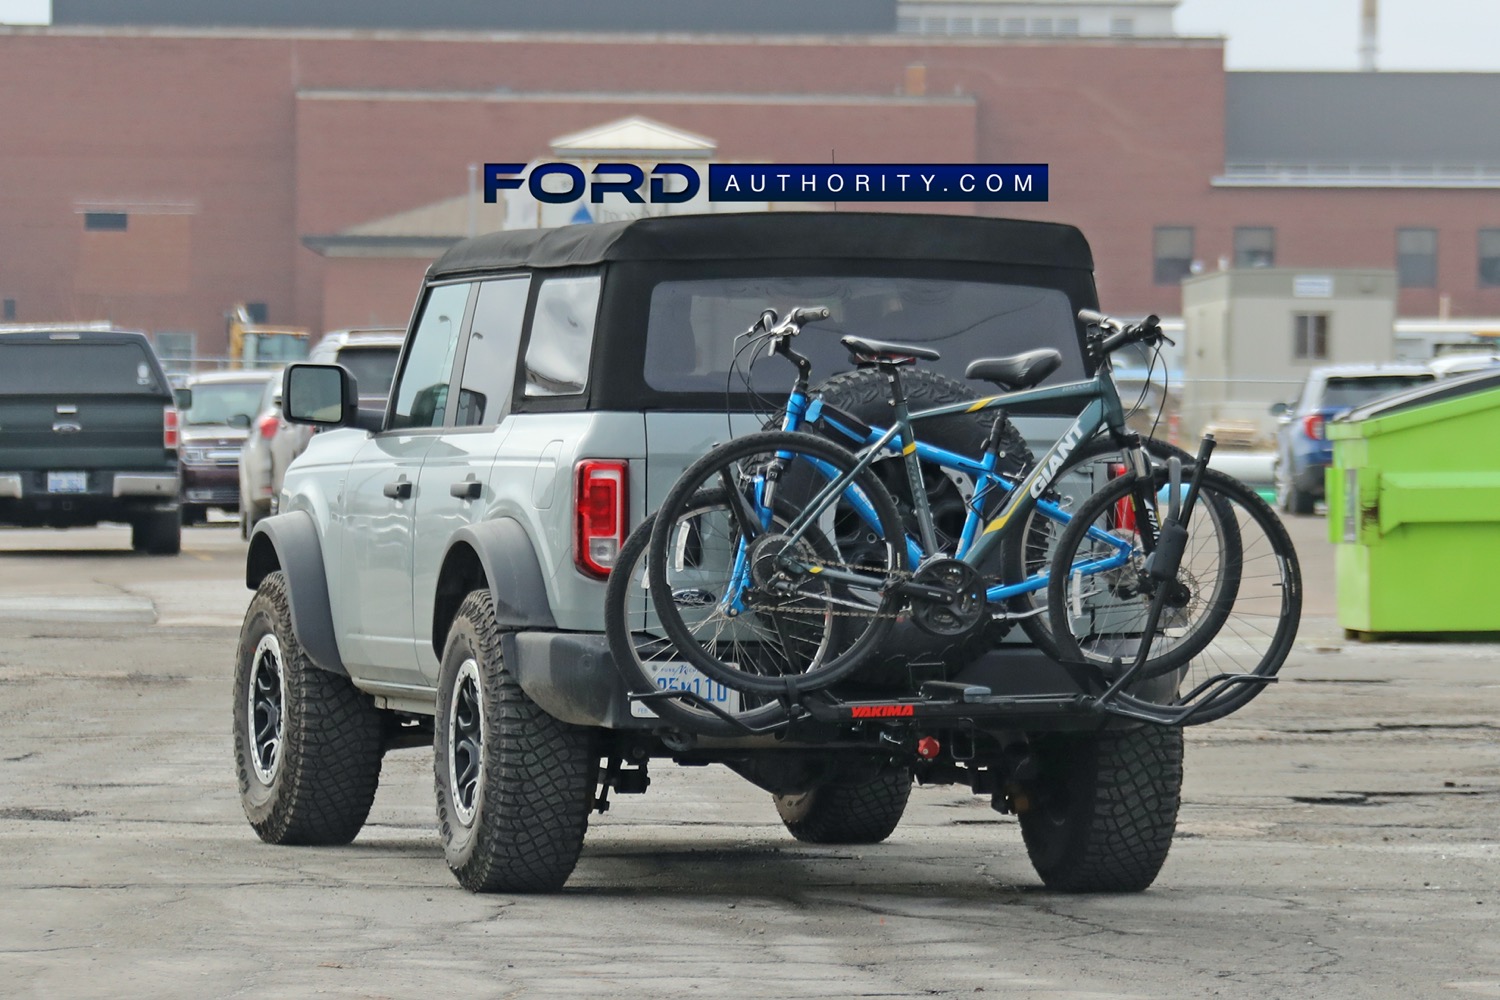 2021 Ford Bronco Four-Door With Yakima Bike Rack Spied Testing ...